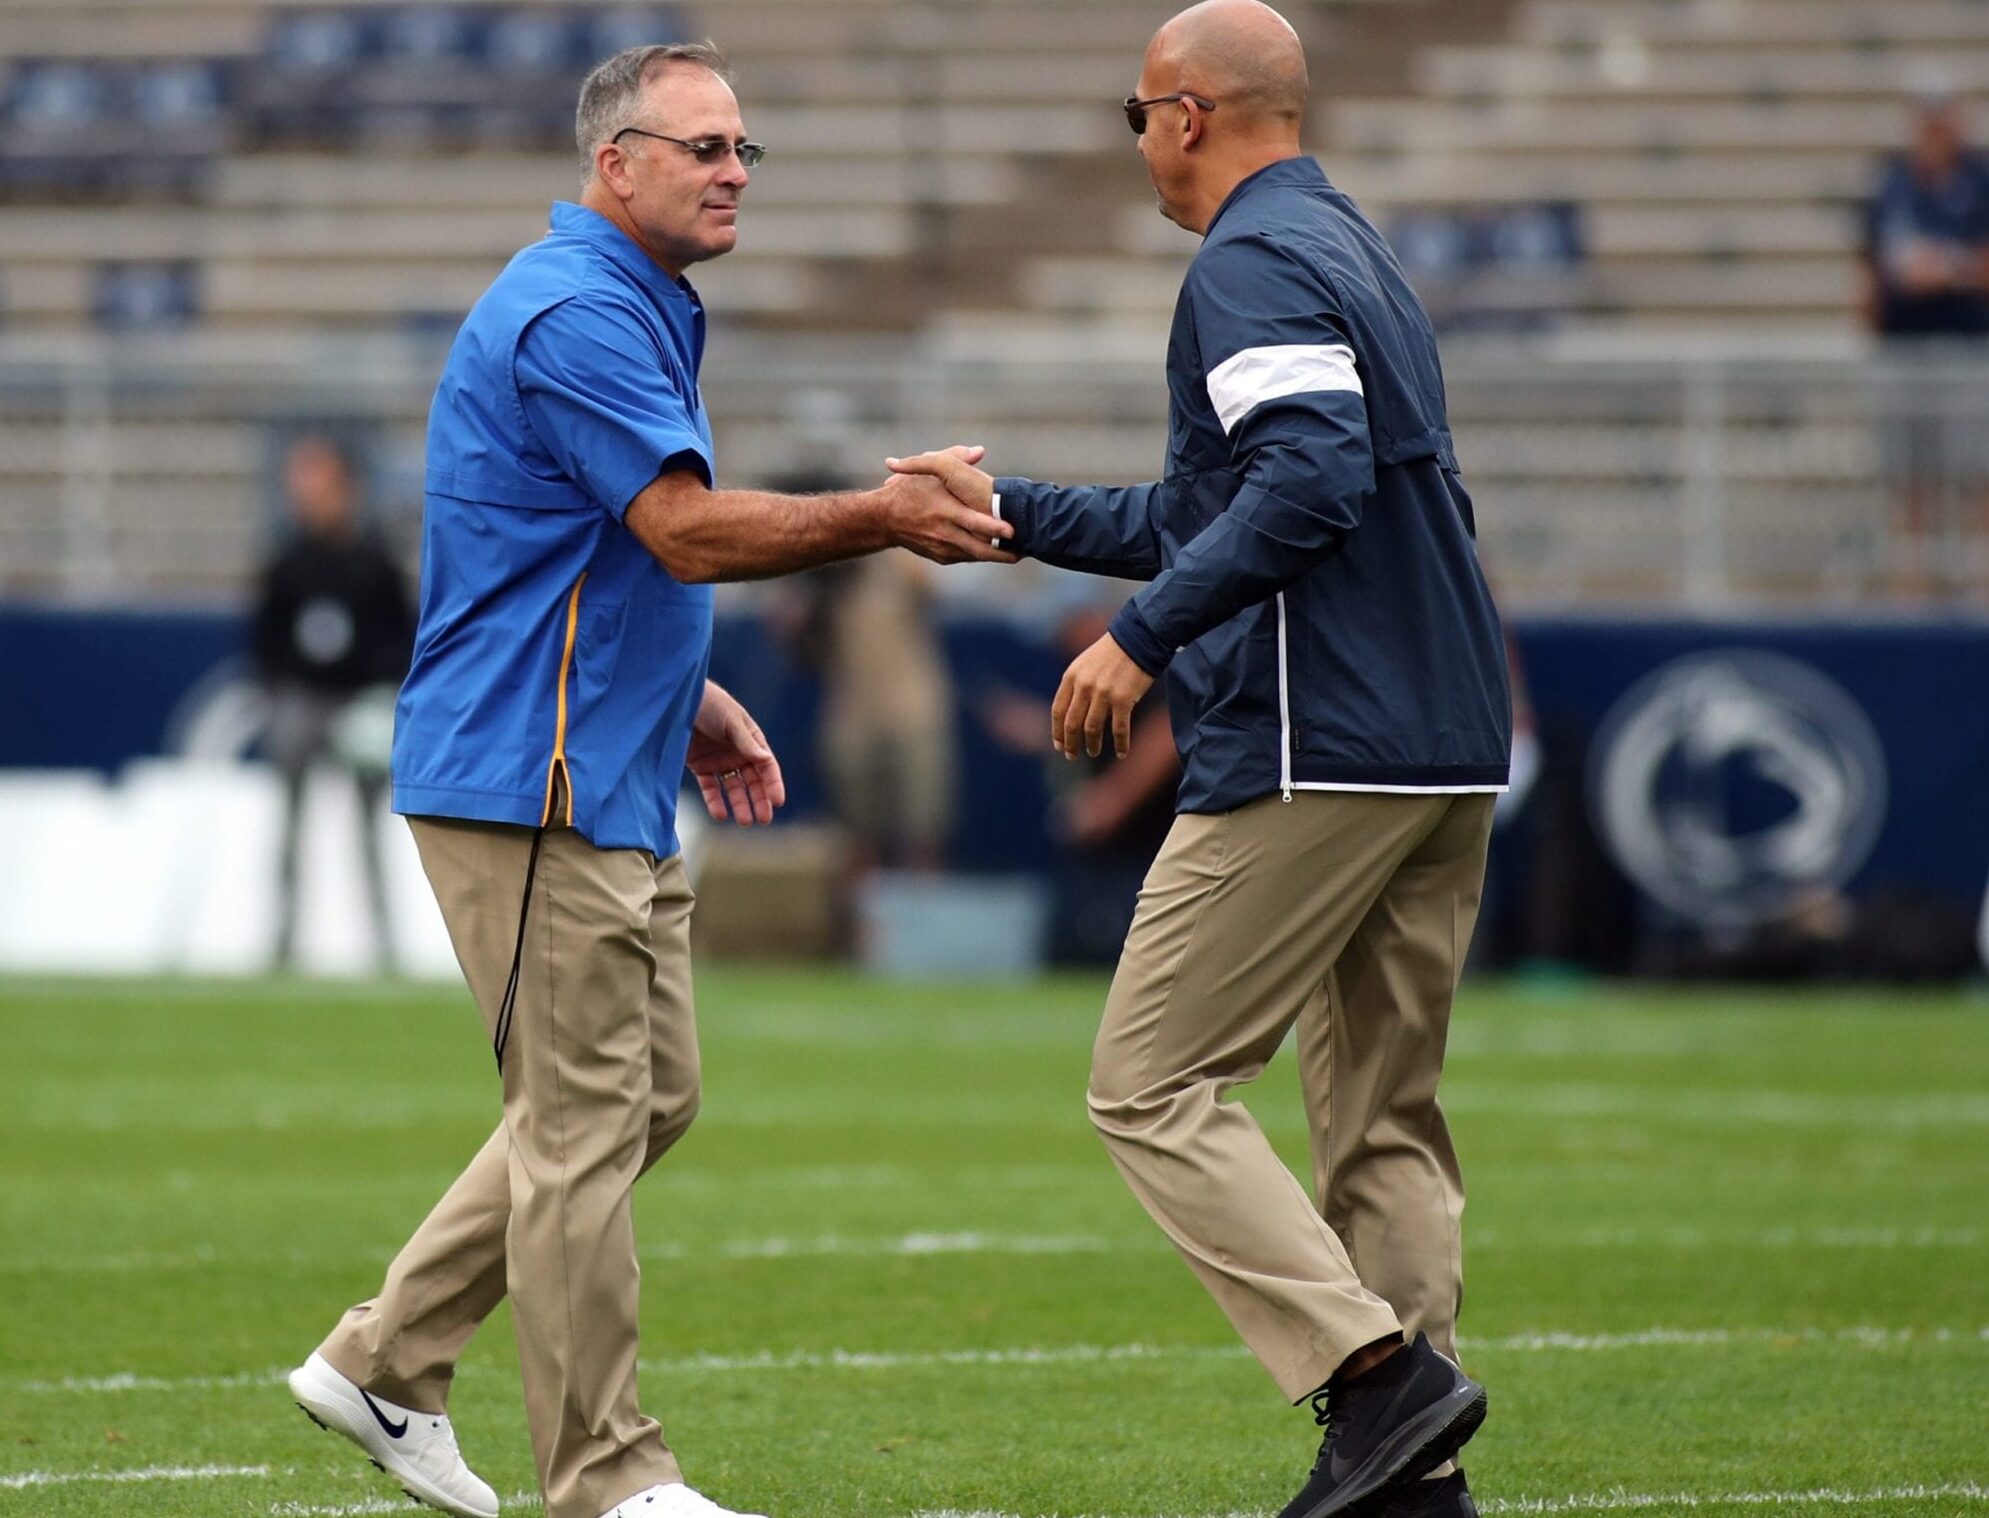 Pitt football head coach Pat Narduzzi and Penn State football head coach James Franklin shake hands